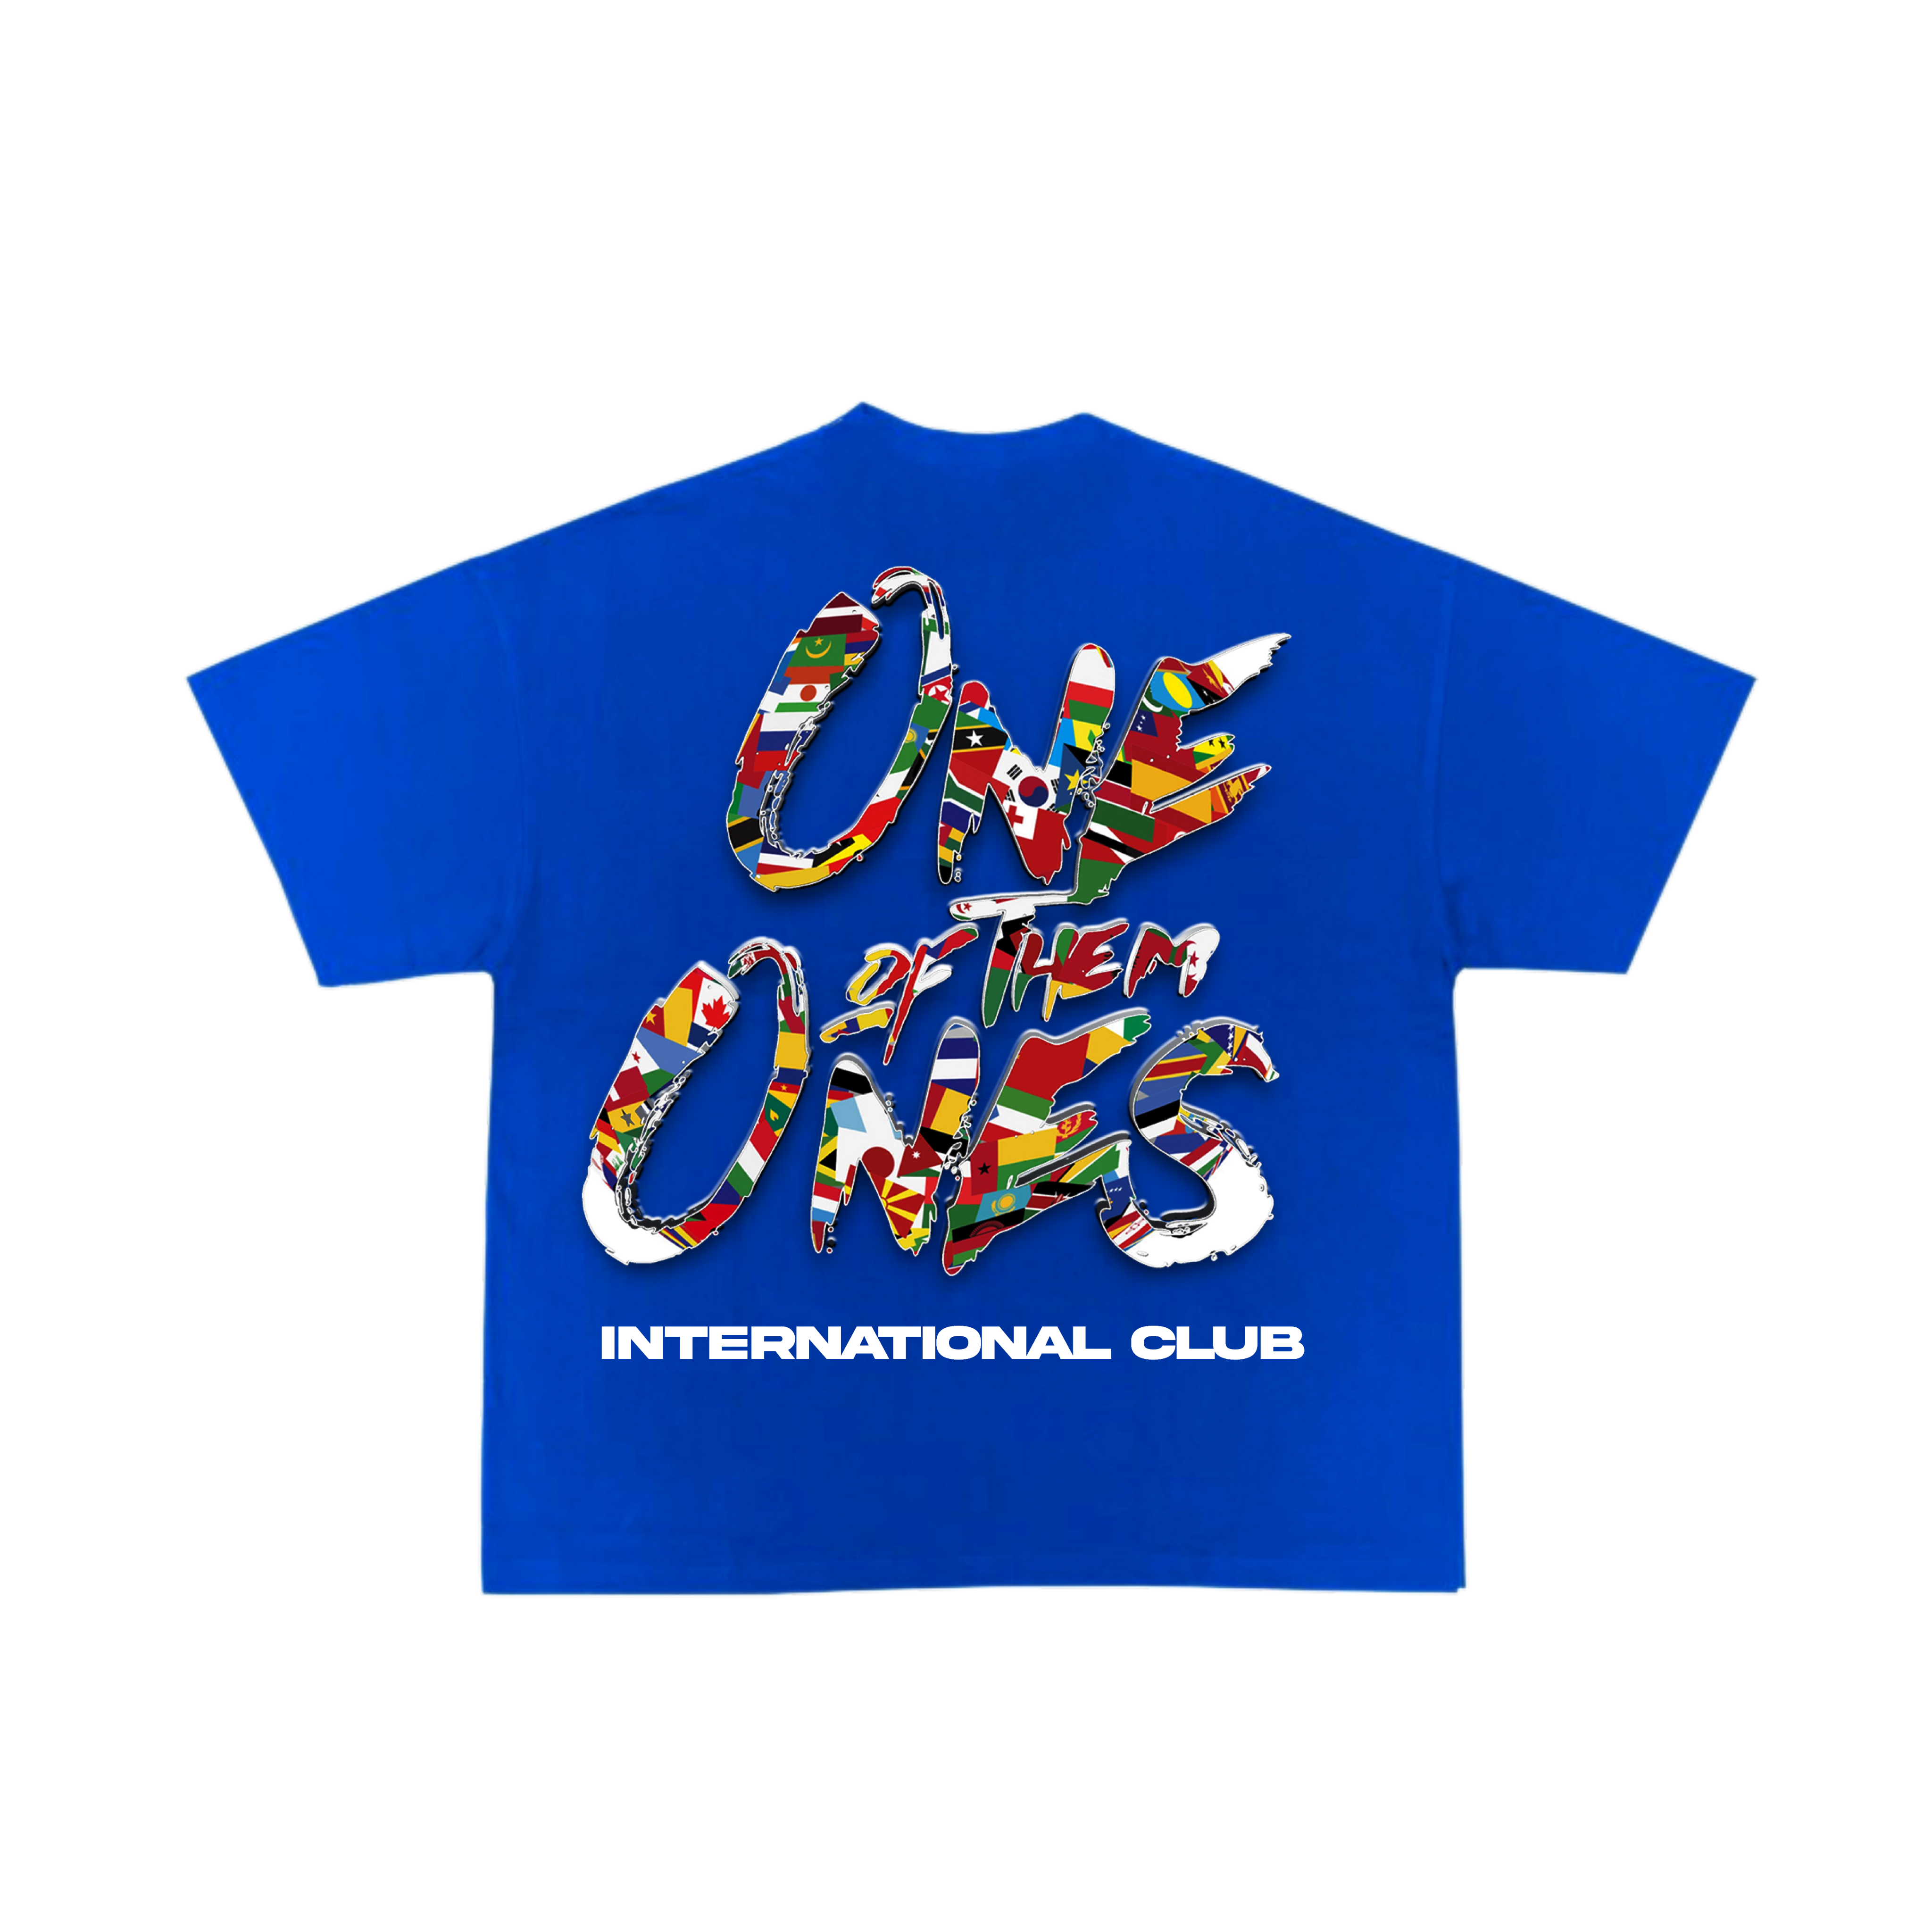 Organik Lyfestyle - 1OFTHEM1's International Club - Blue T-Shirt